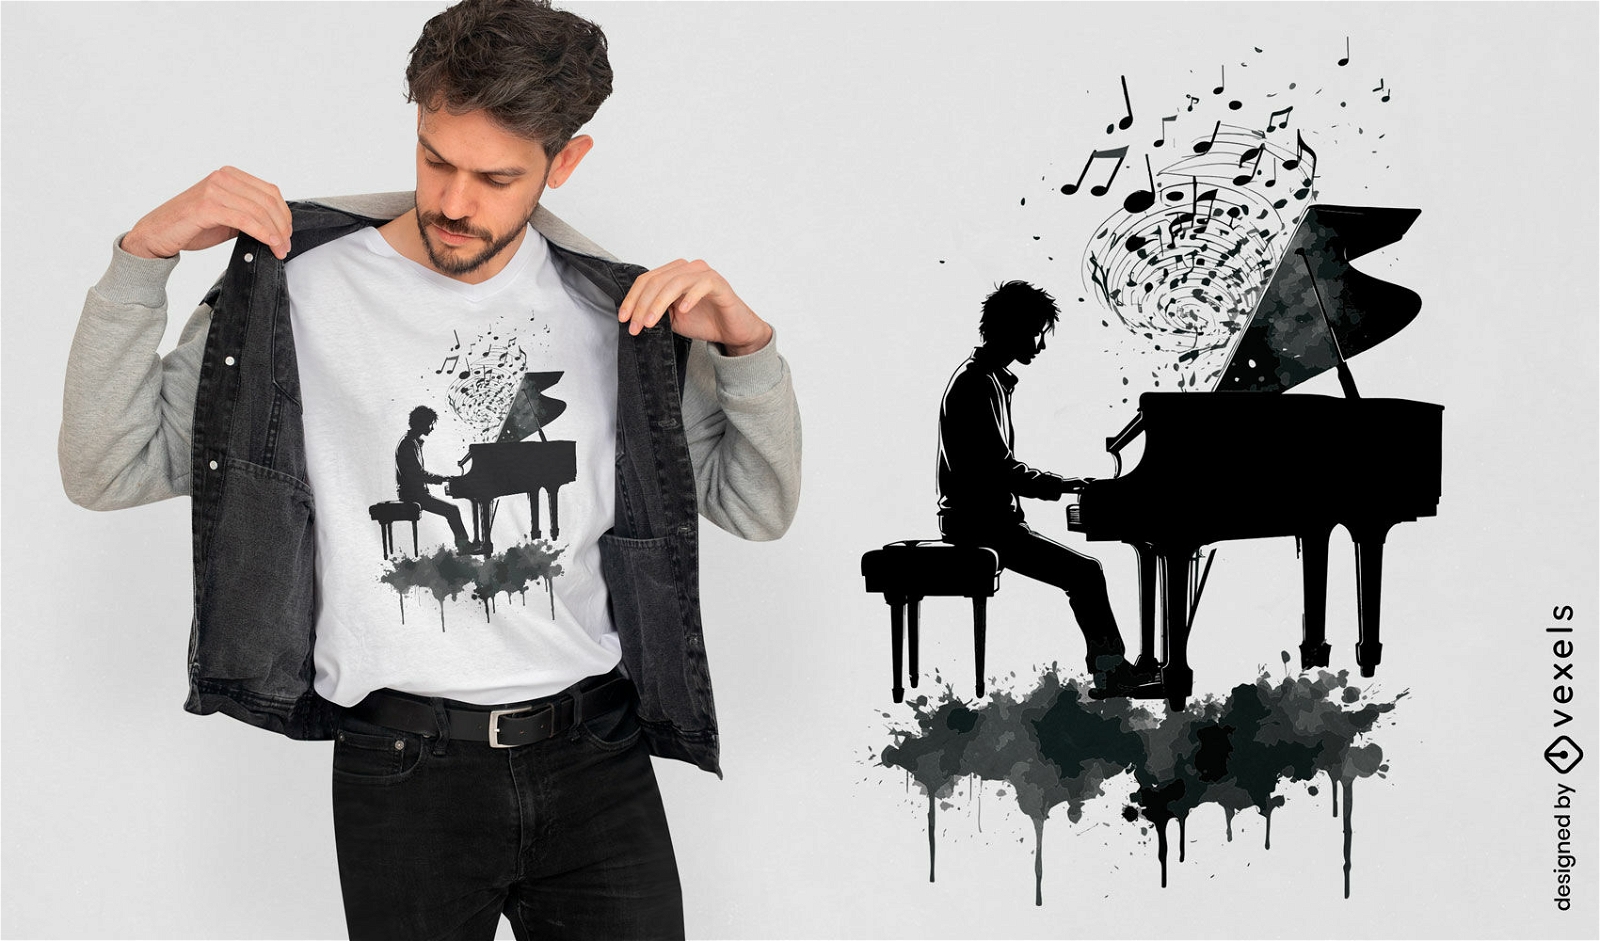 Piano man silhouette t-shirt design